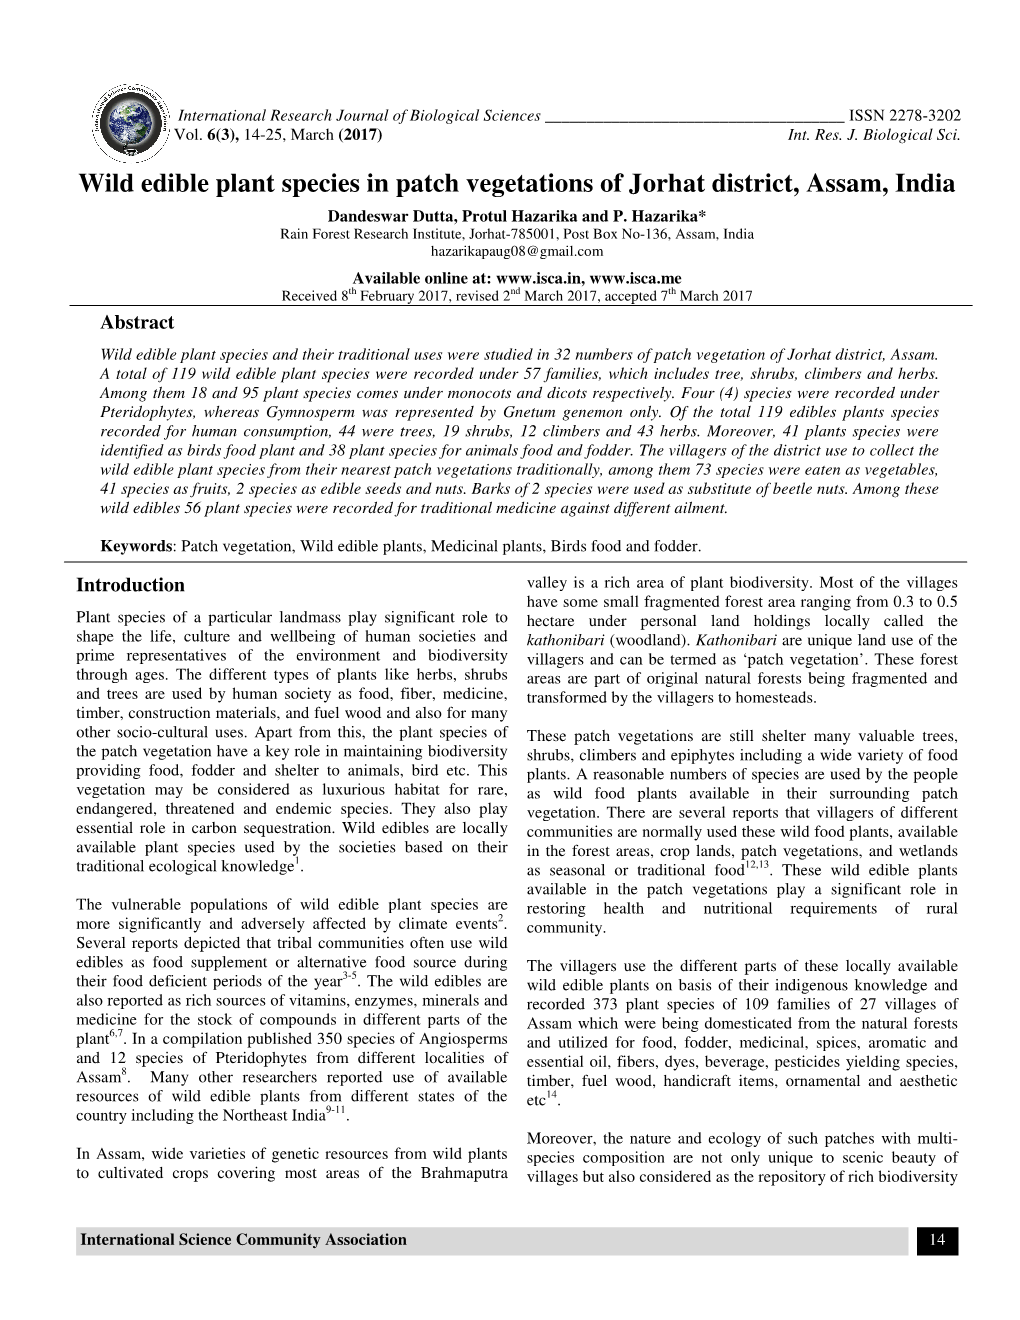 Nt Species in Patch Vegetations of Jorhat District, Assam, India Dandeswar Dutta, Protul Hazarika and P